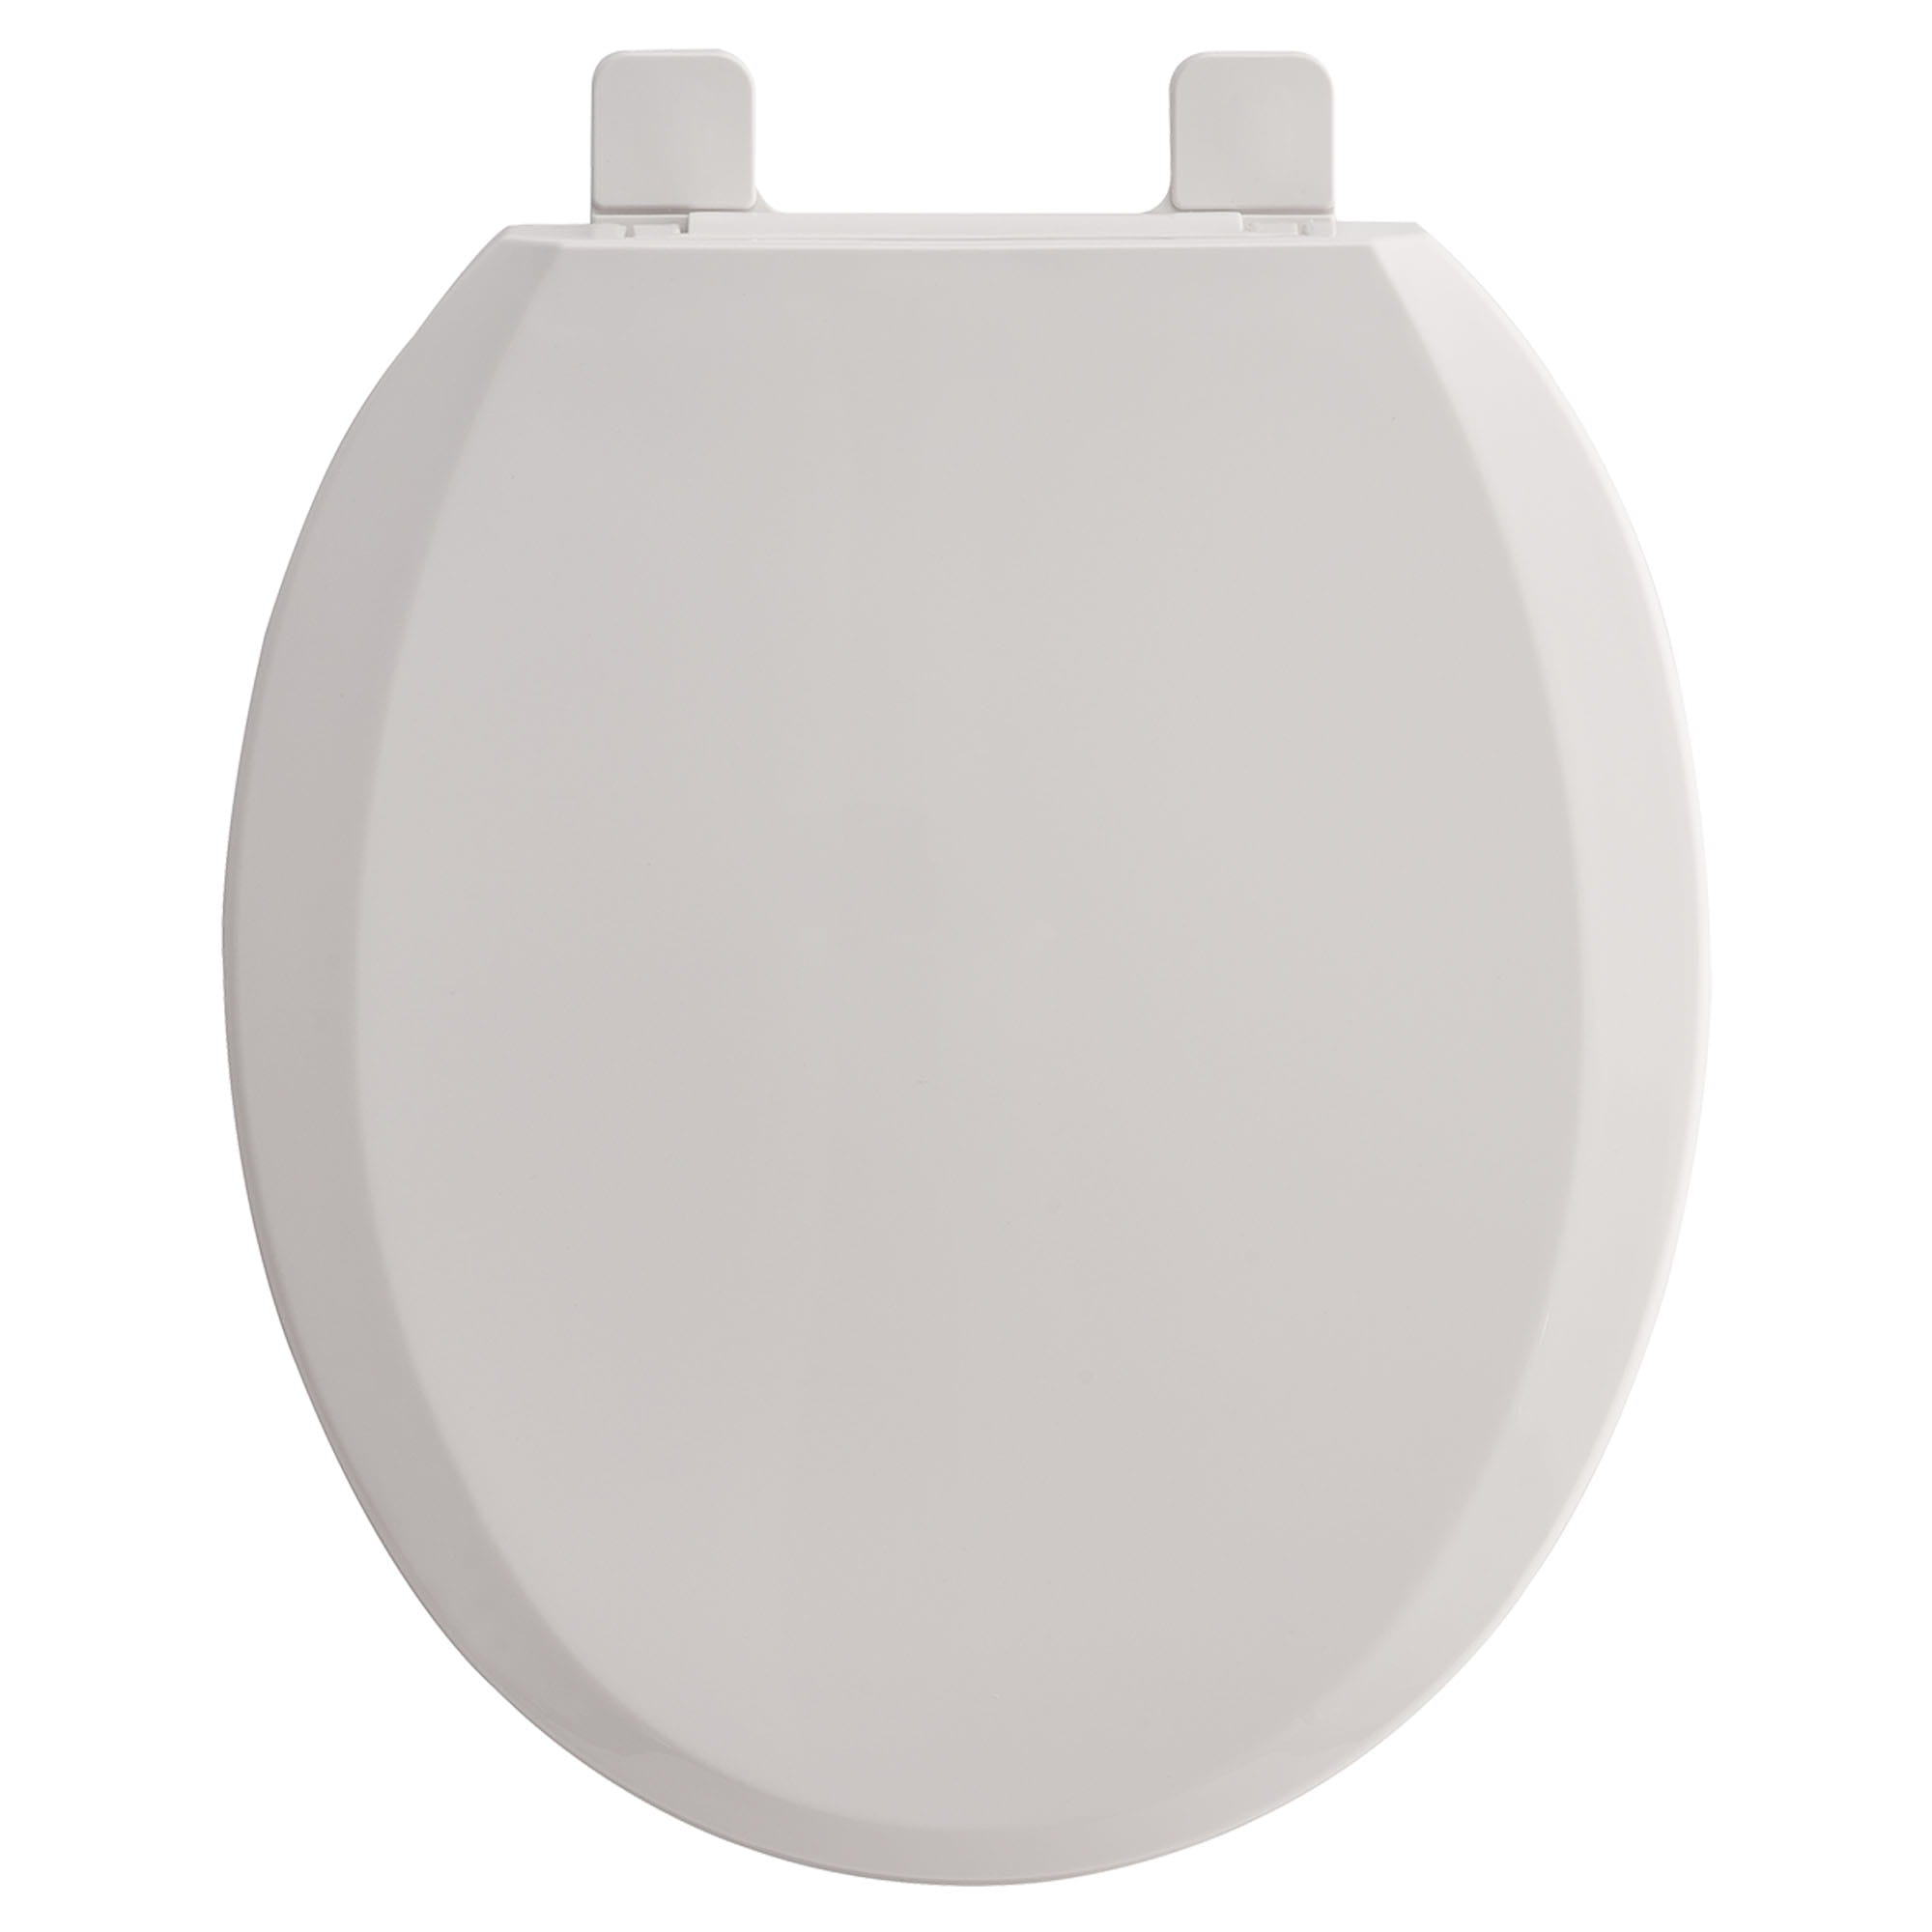 Bathroom Toilet Seat Slow Closed Front Lid White Round Plastic Hinge Hardware 